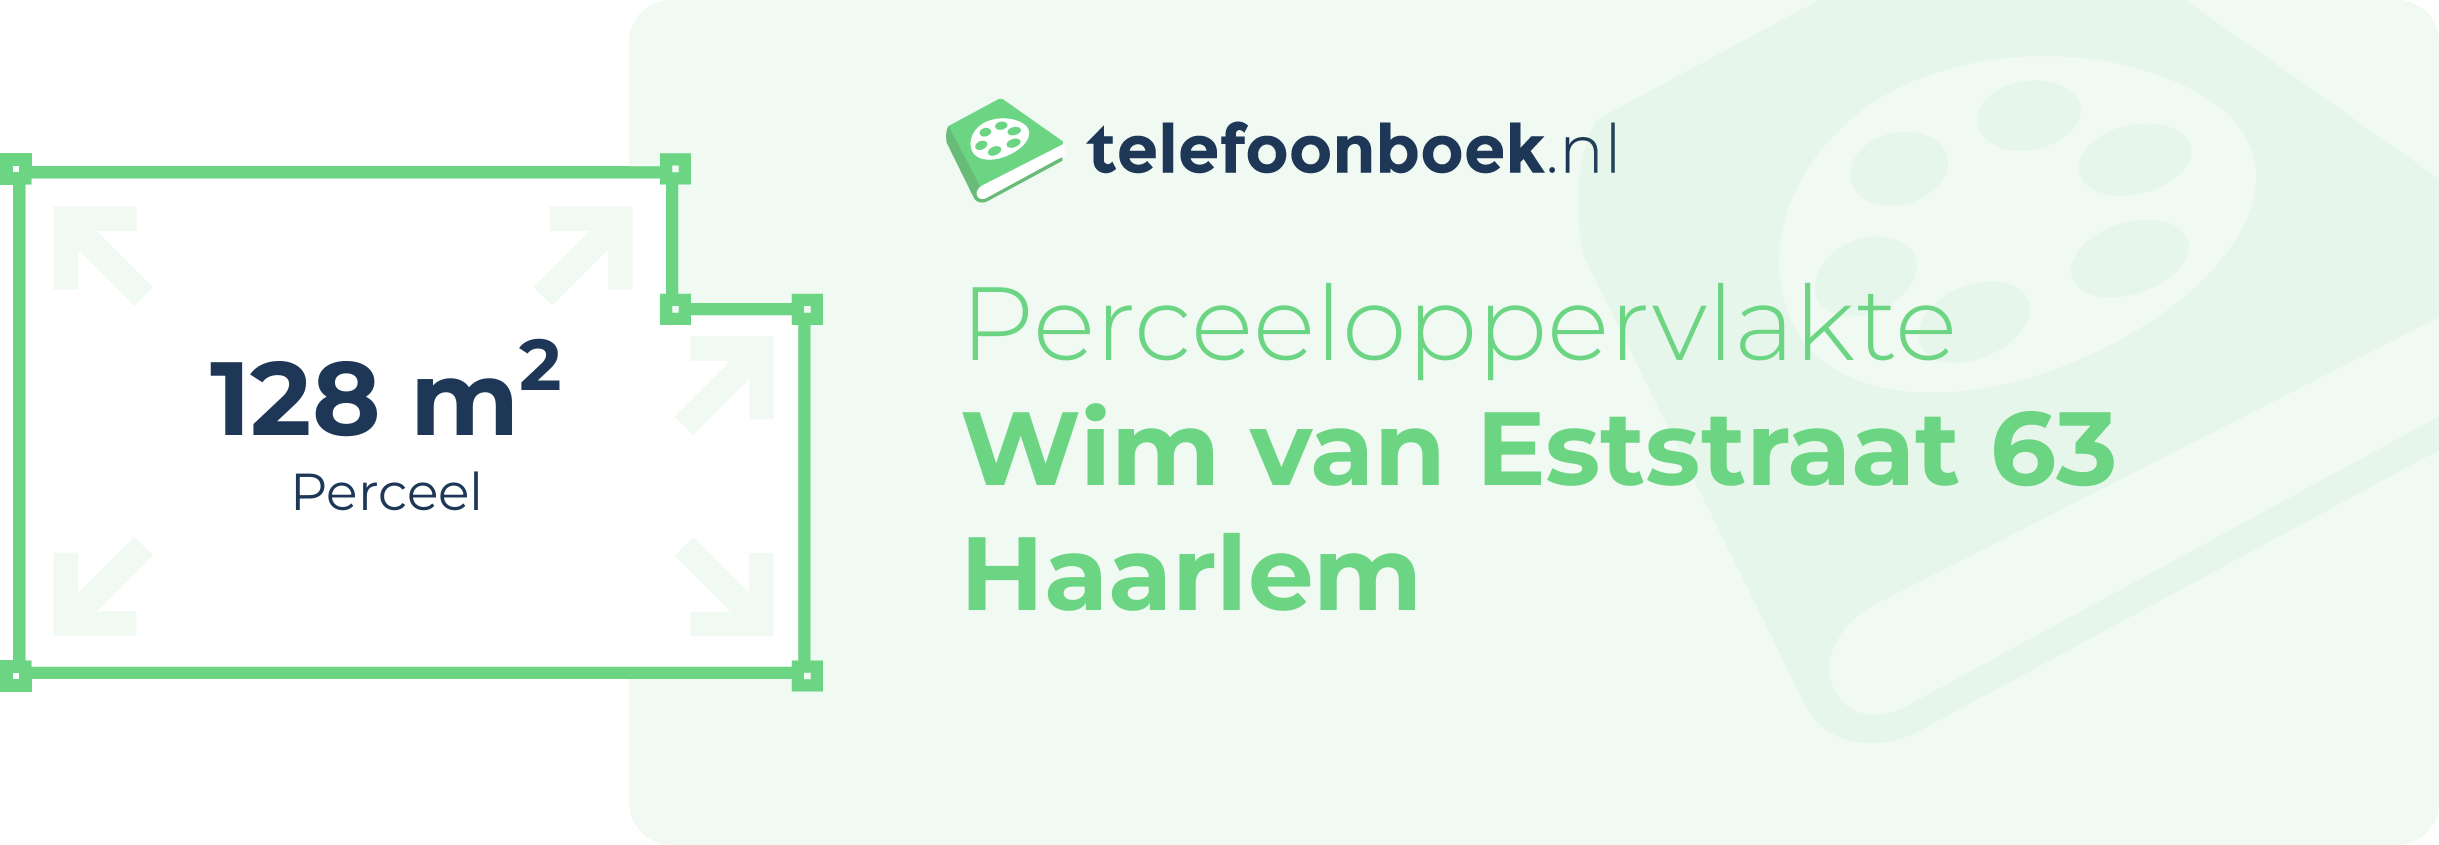 Perceeloppervlakte Wim Van Eststraat 63 Haarlem